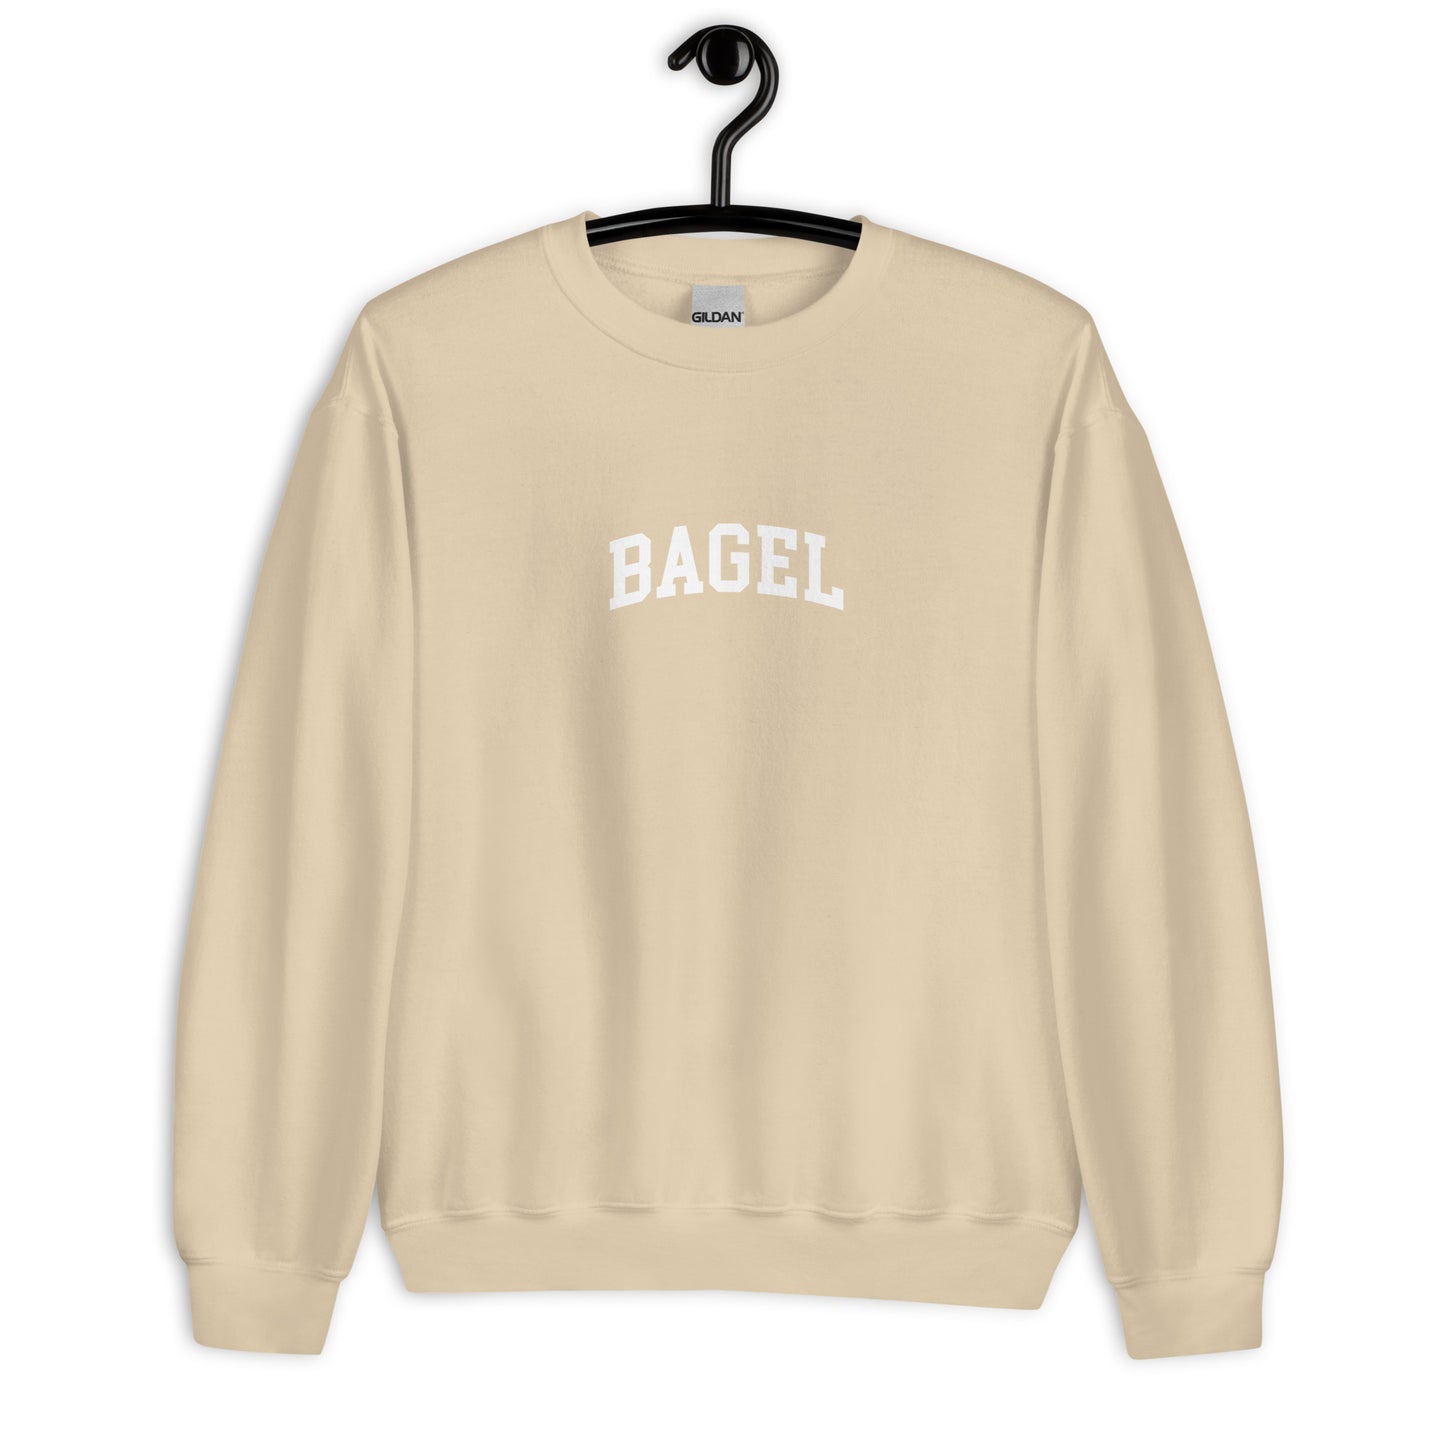 Bagel Sweatshirt - Arched Font